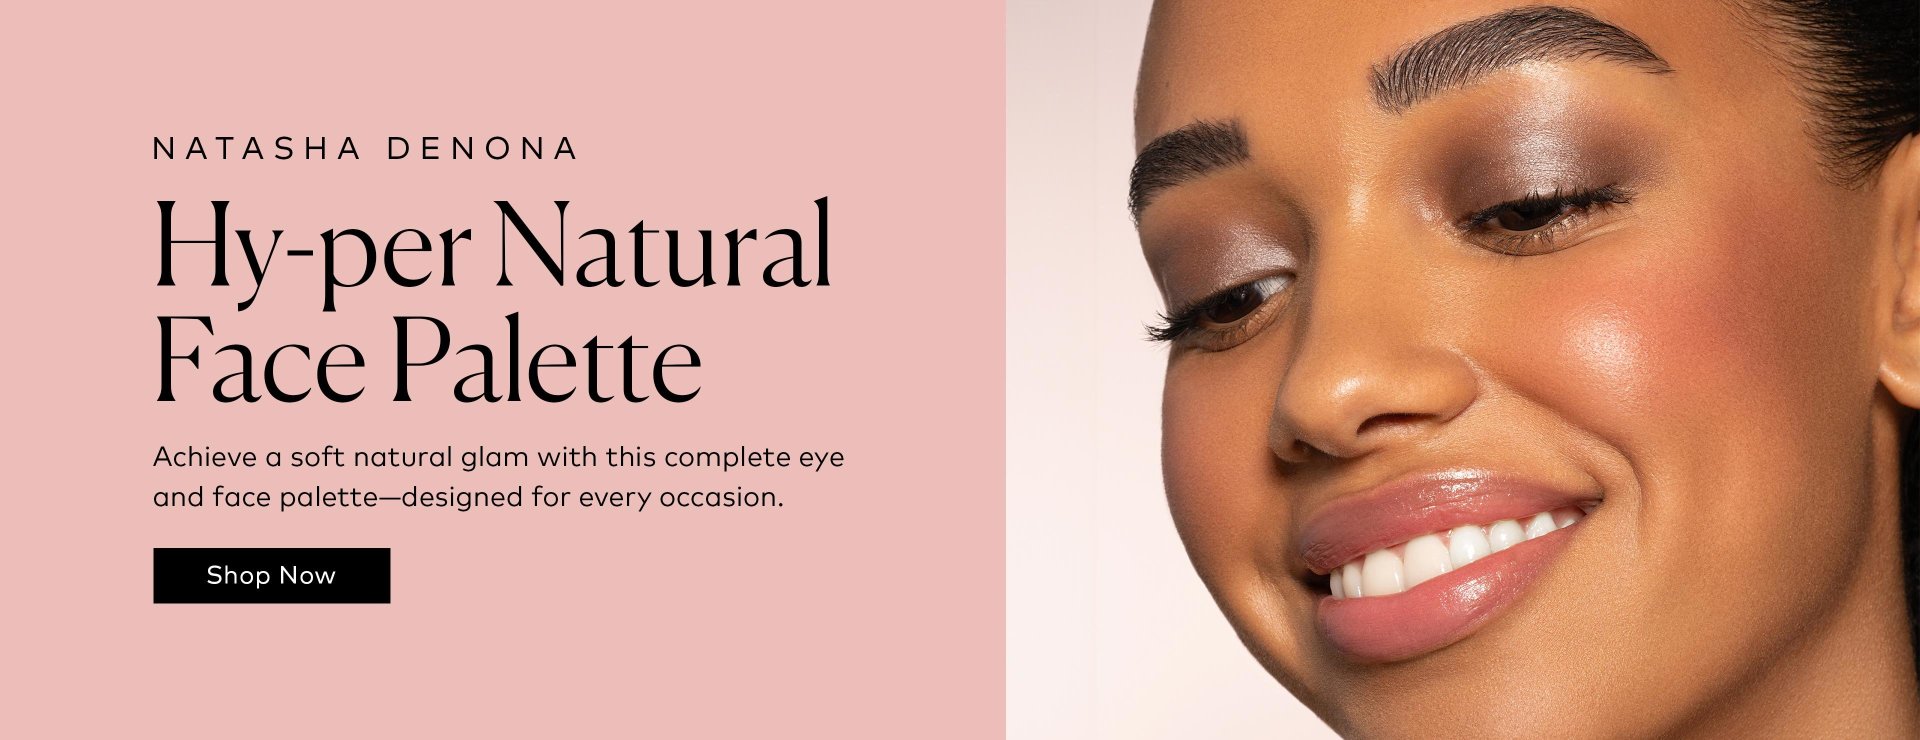 Shop the Natasha Denona Hy-per Natural Face Palette on Beautylish.com!